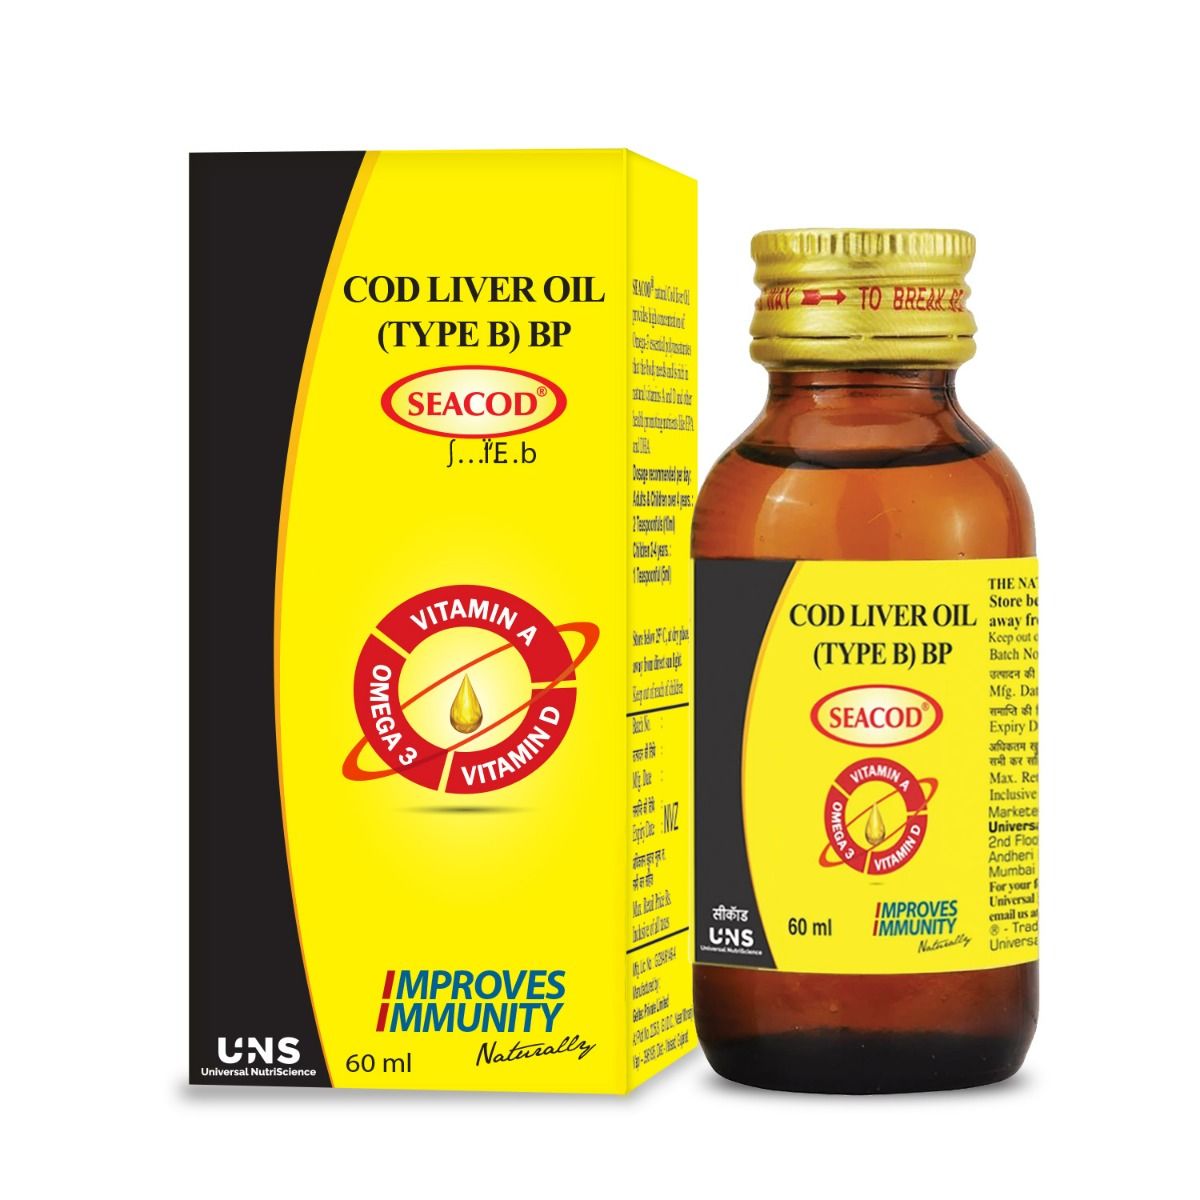 Buy Seacod Cod Liver Oil, 60 ml Online